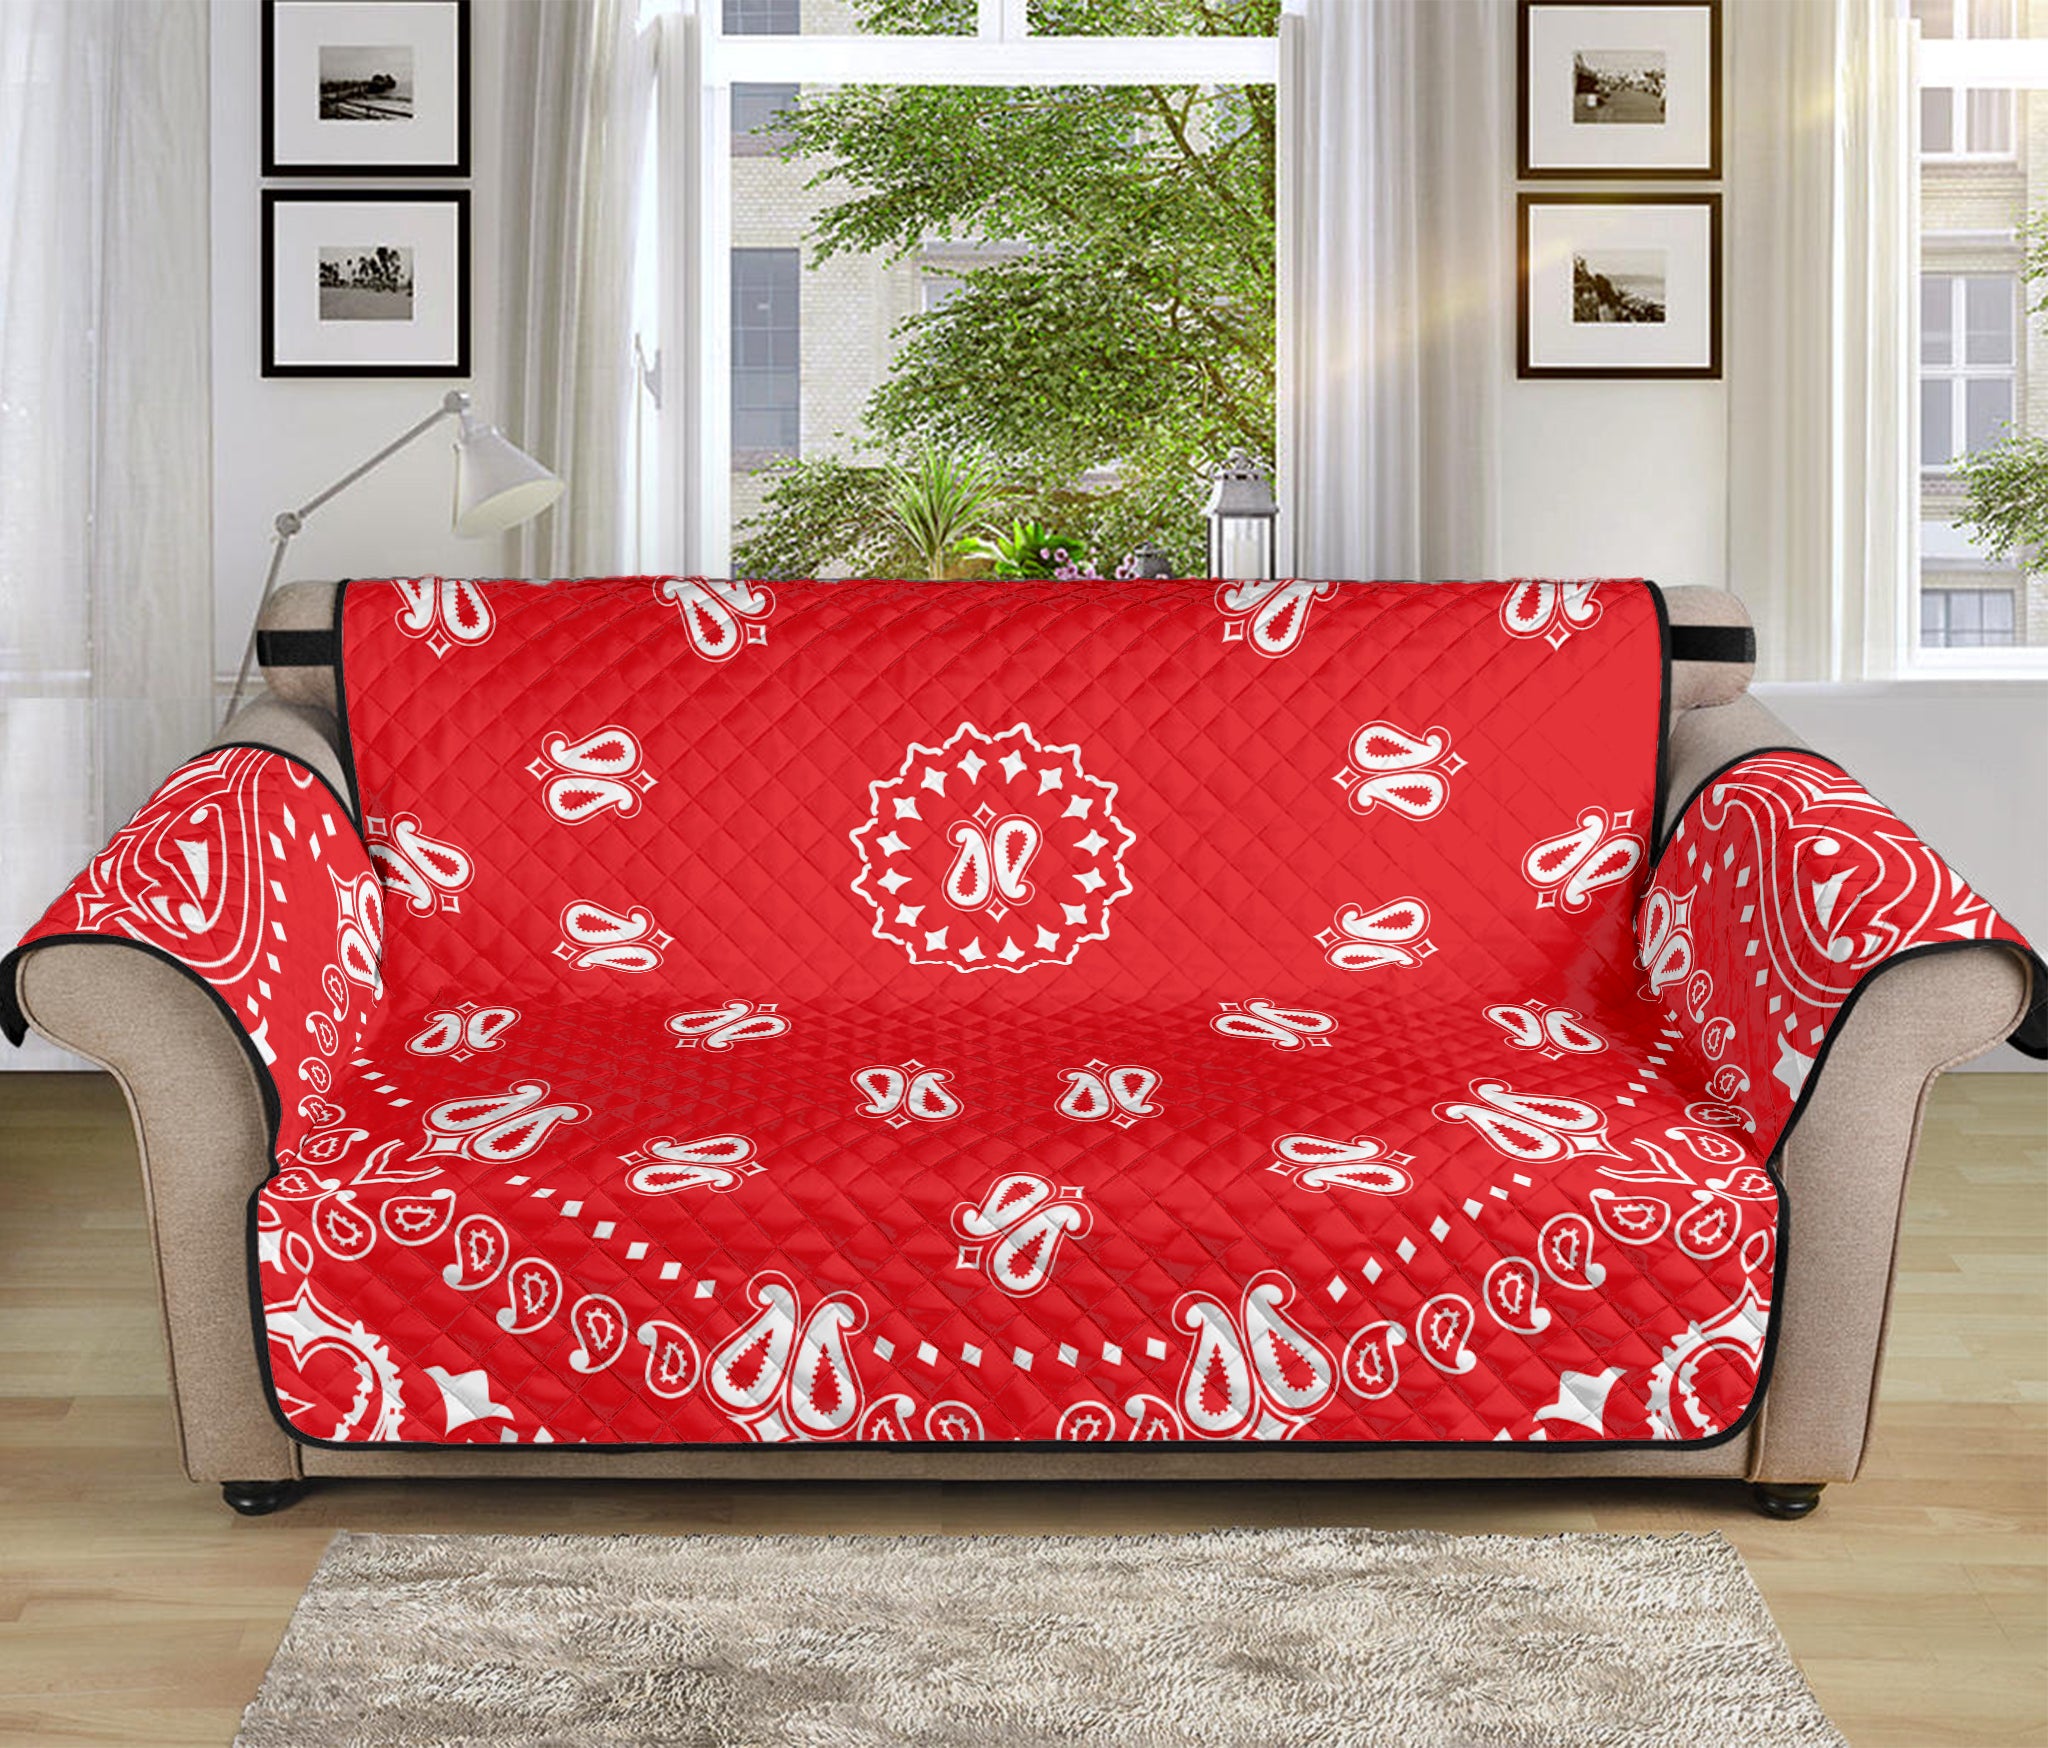 Red Paisley Bandana Print Sofa Protector